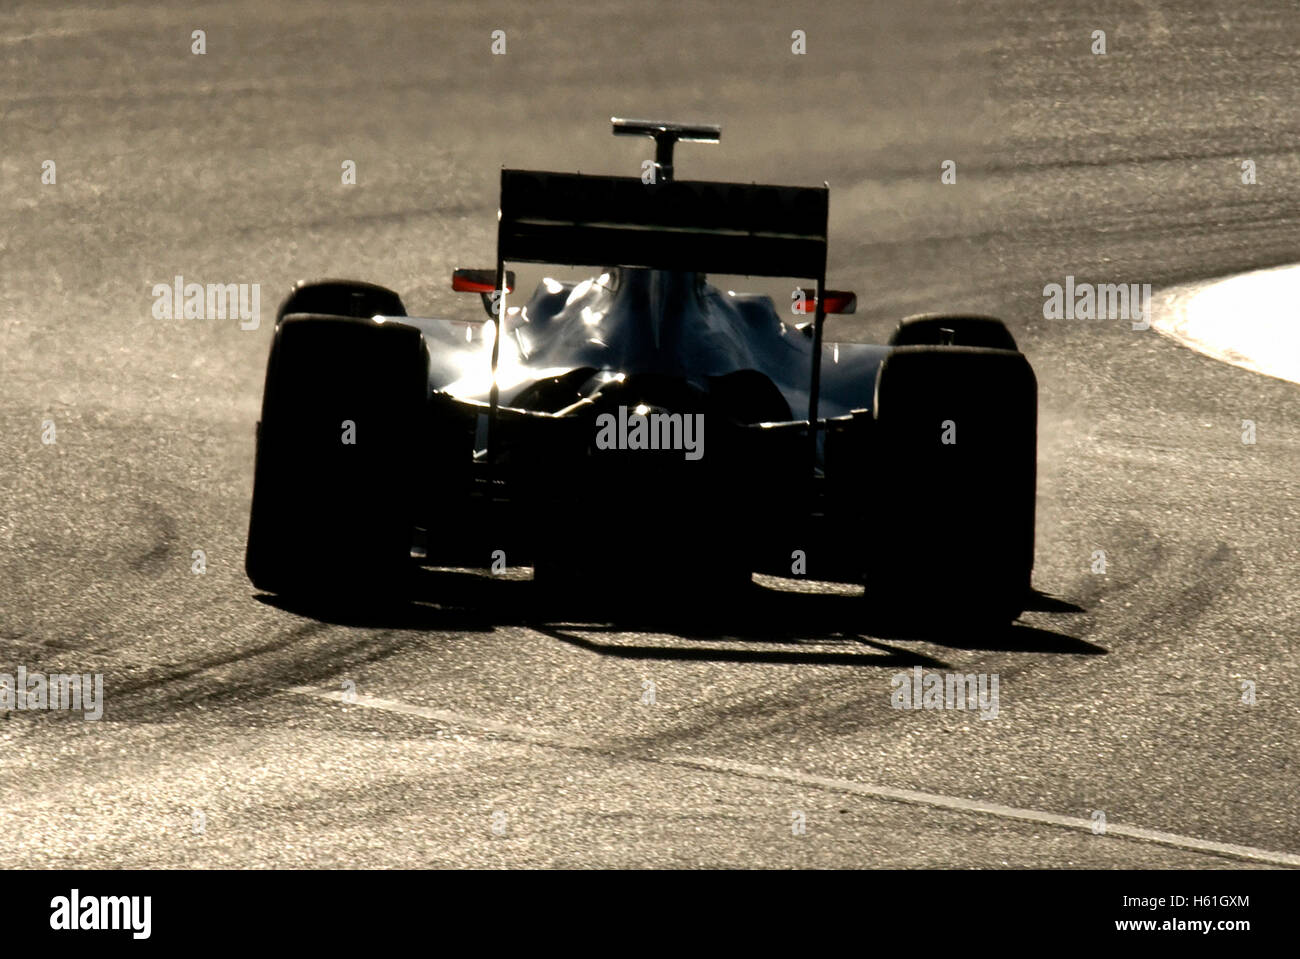 Motorsport, Formel1, Tests auf dem Circuit de Catalunya Rennen verfolgen in Barcelona, Spanien, Europa Stockfoto